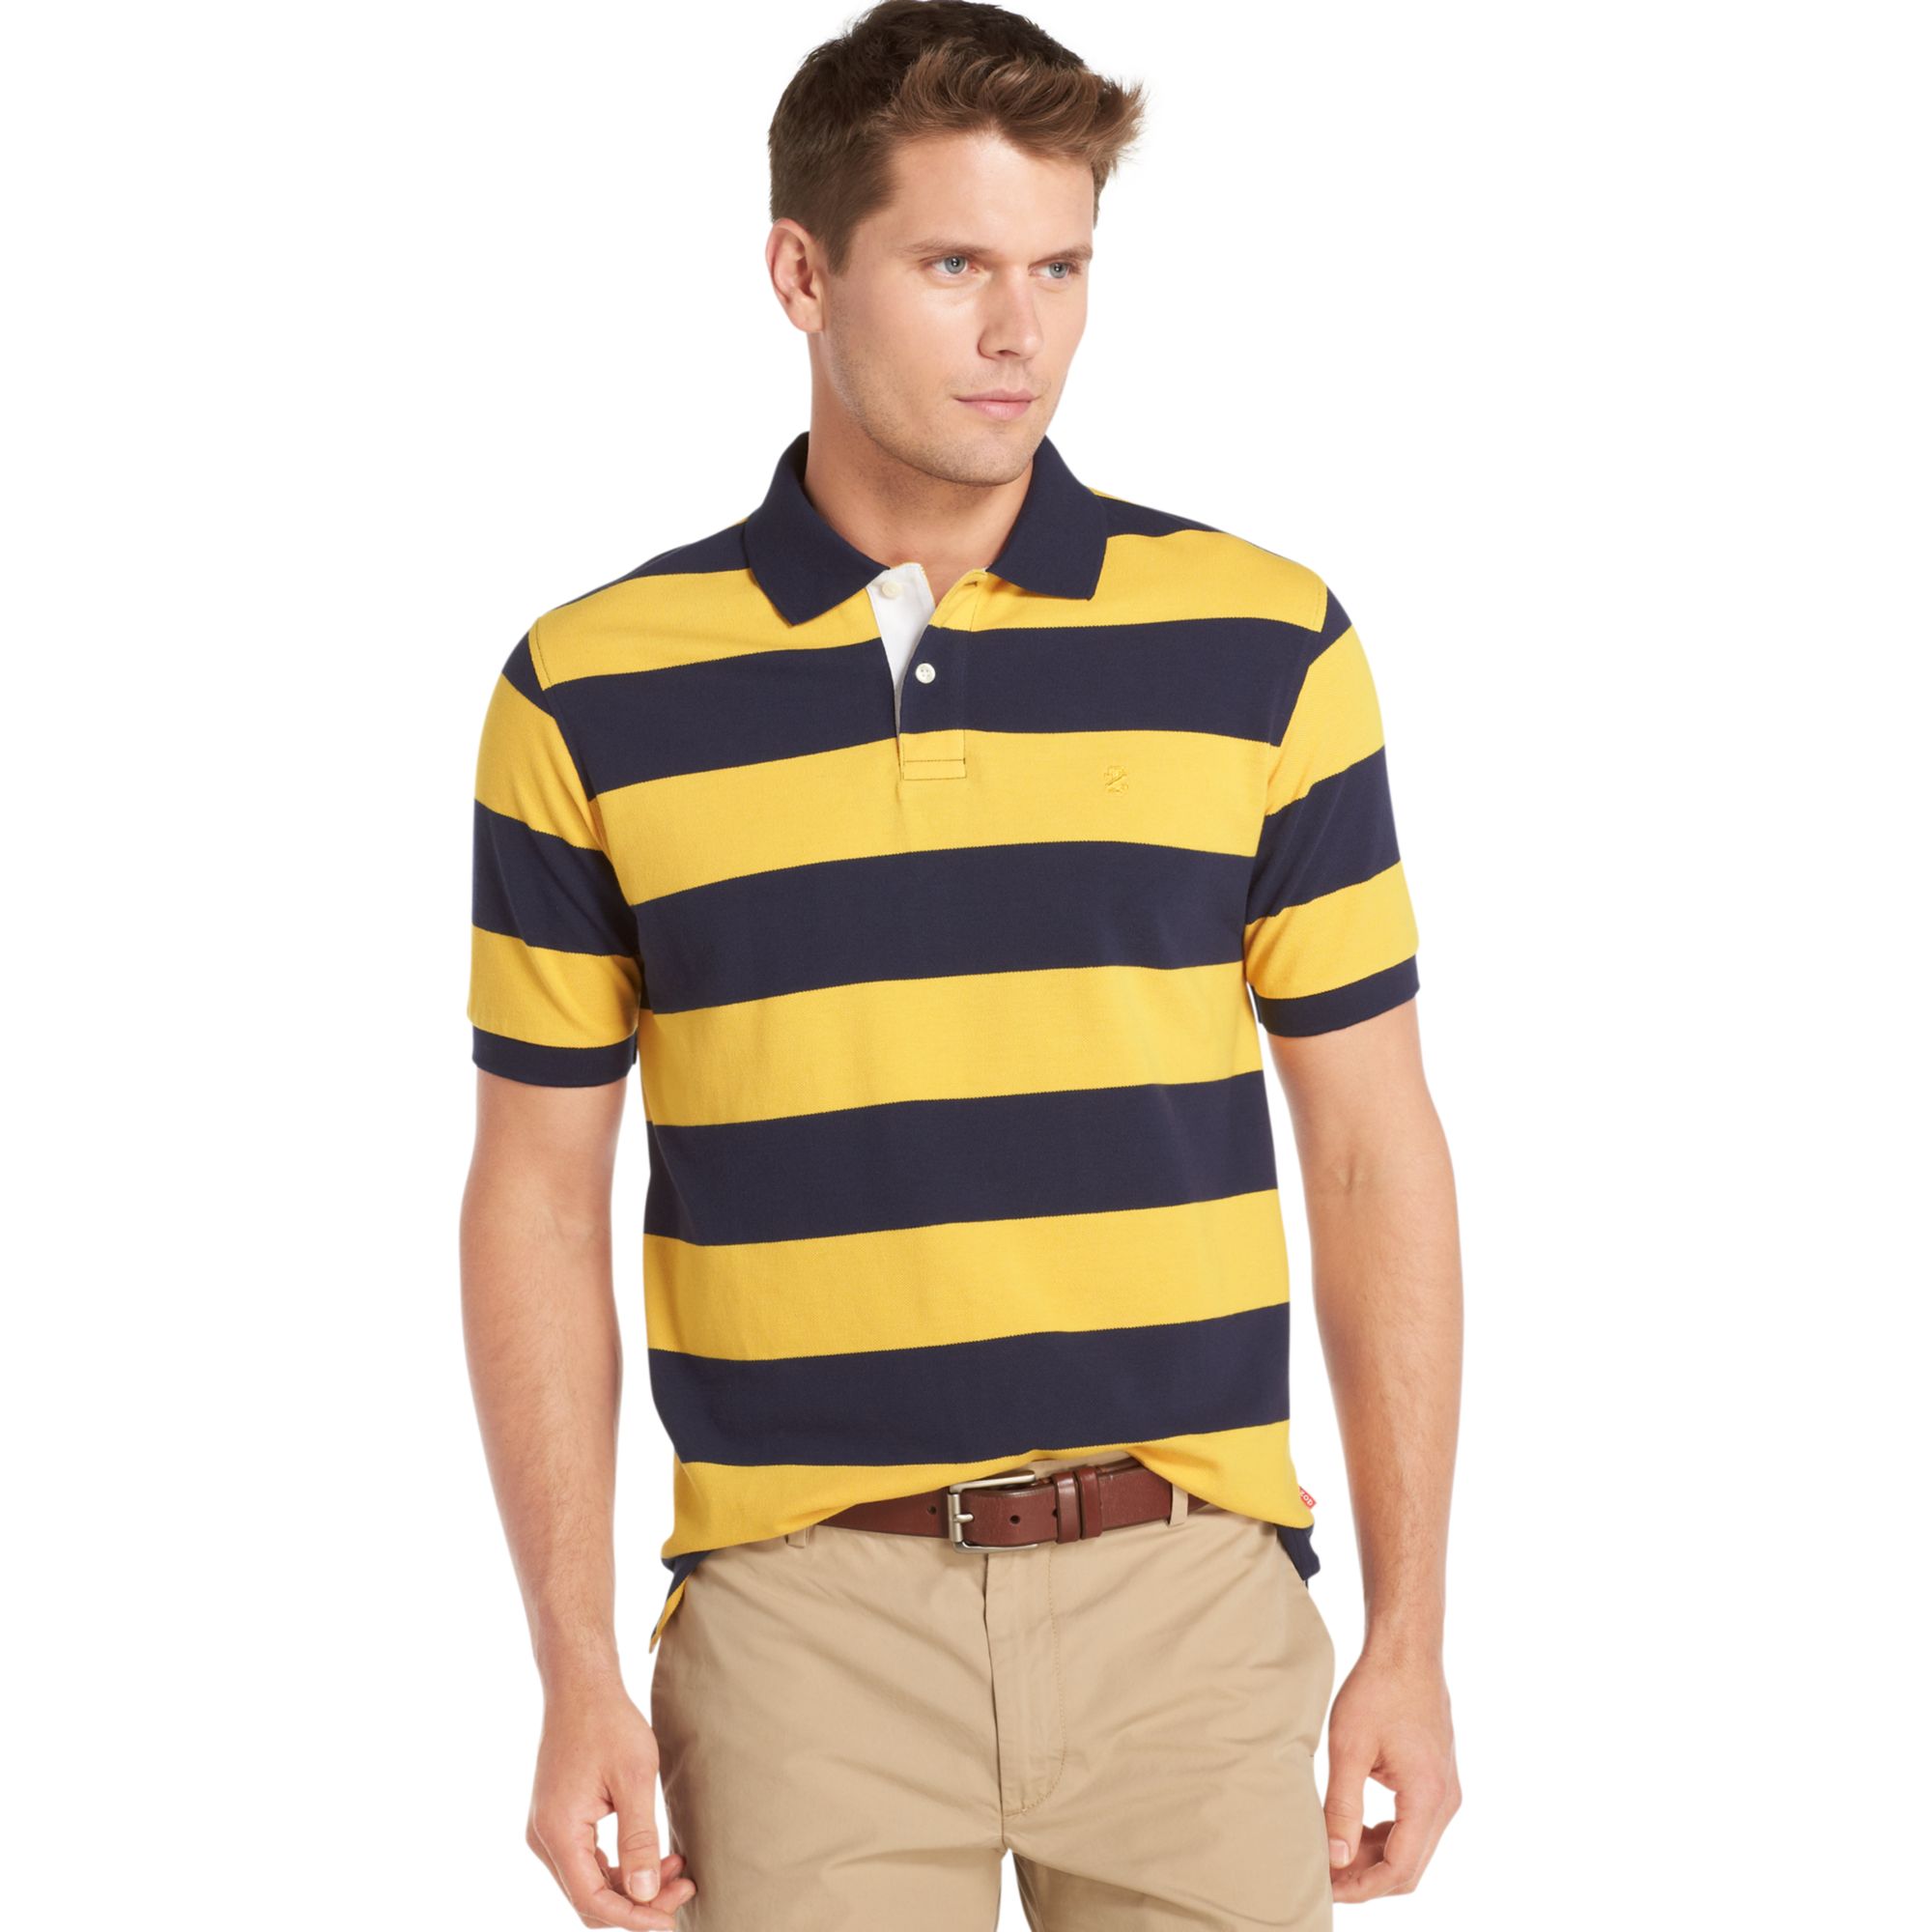 Lyst - Izod Short Sleeve Stripe Pique Polo Shirt in Blue for Men